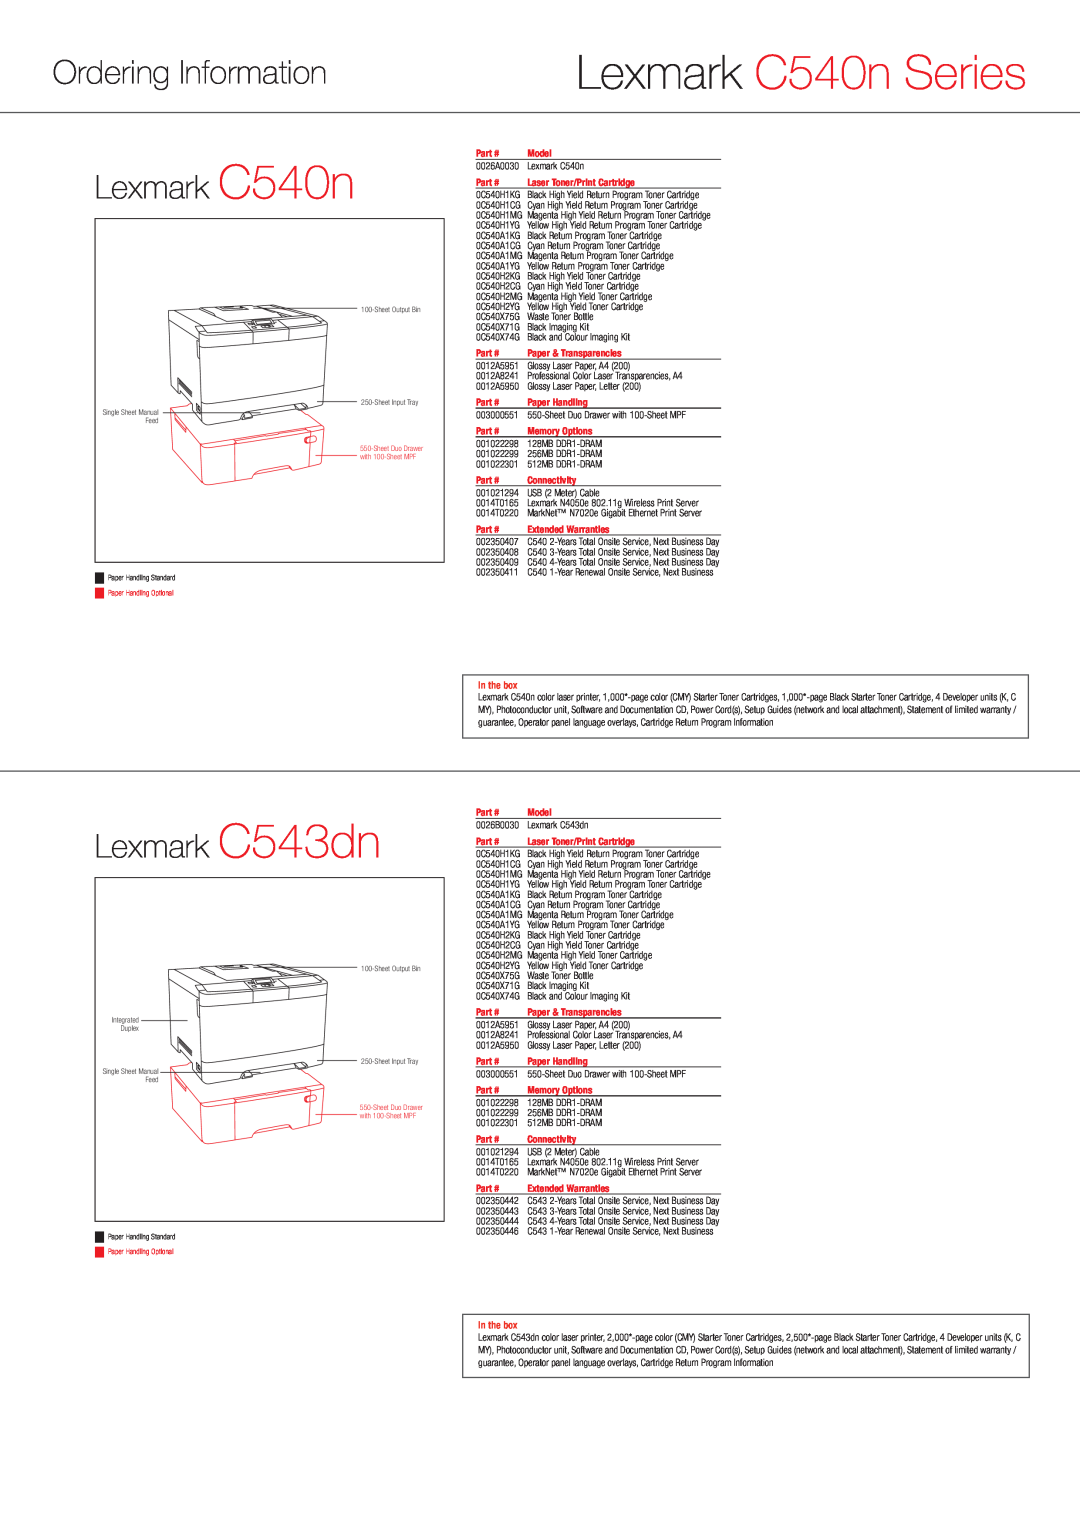 Lexmark manual Ordering Information, Lexmark C543dn, Lexmark C540n Series, In the box 